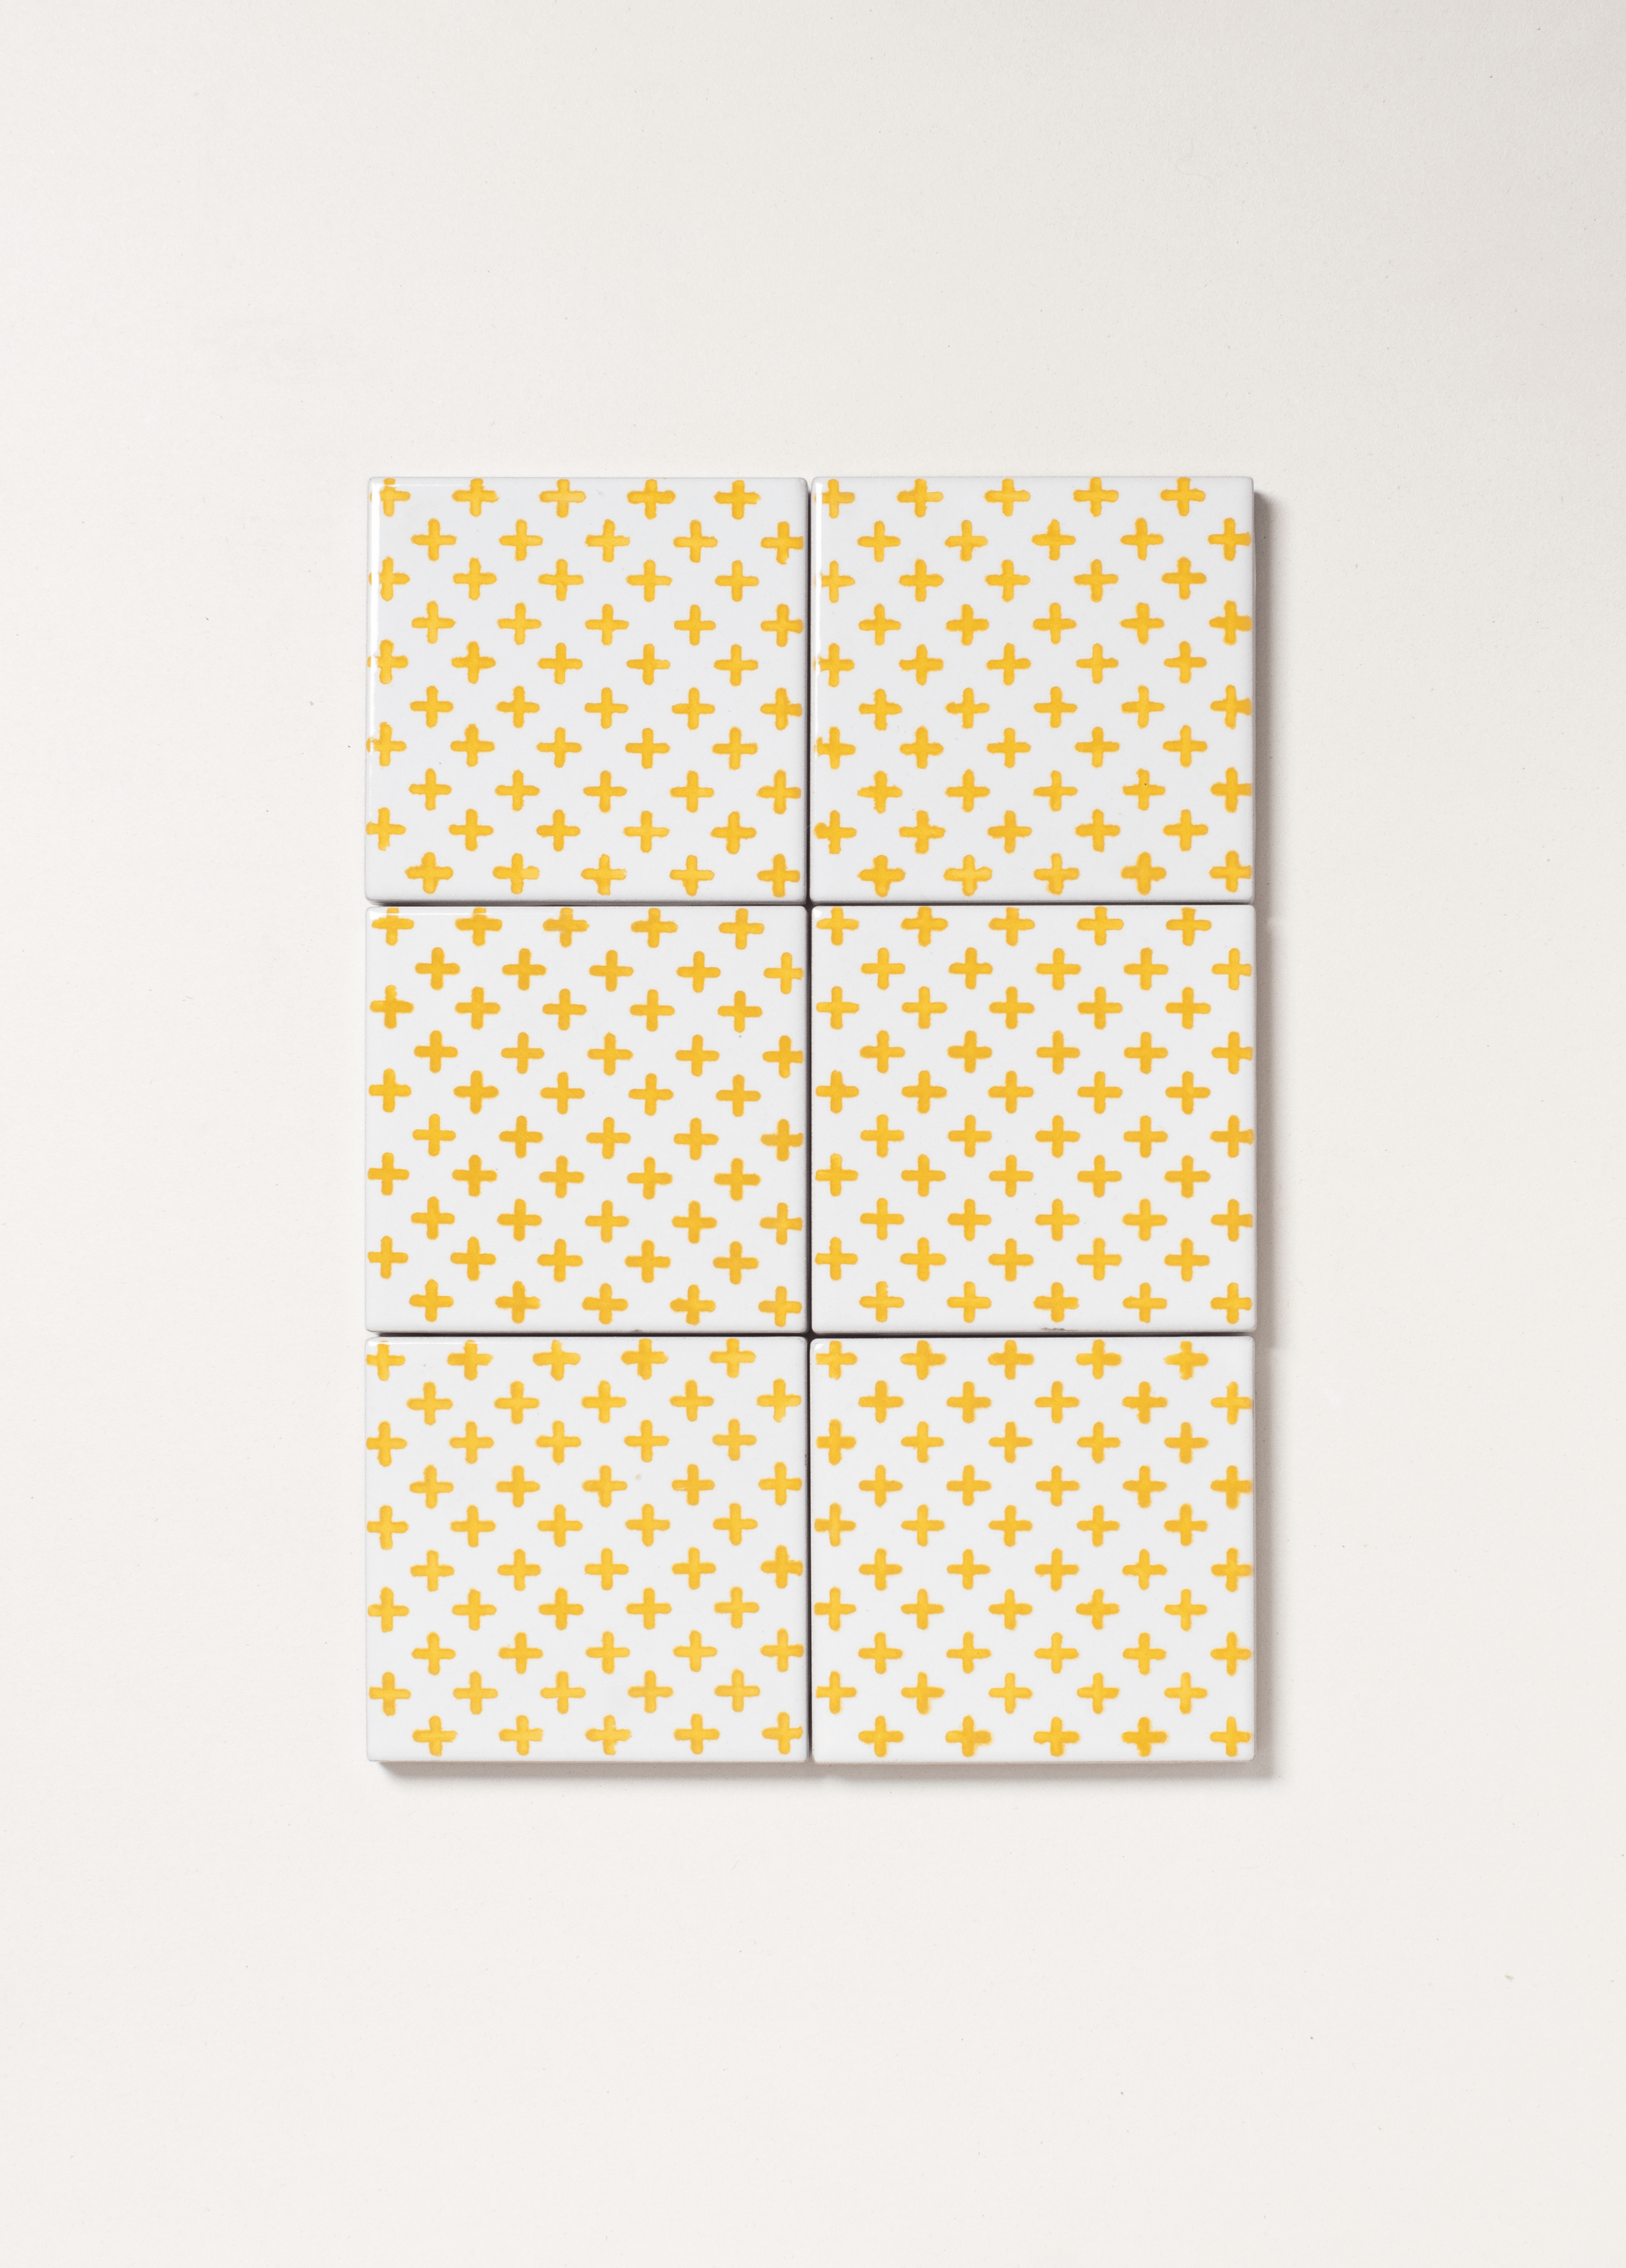 Komon Canary Yellow K3 tiles